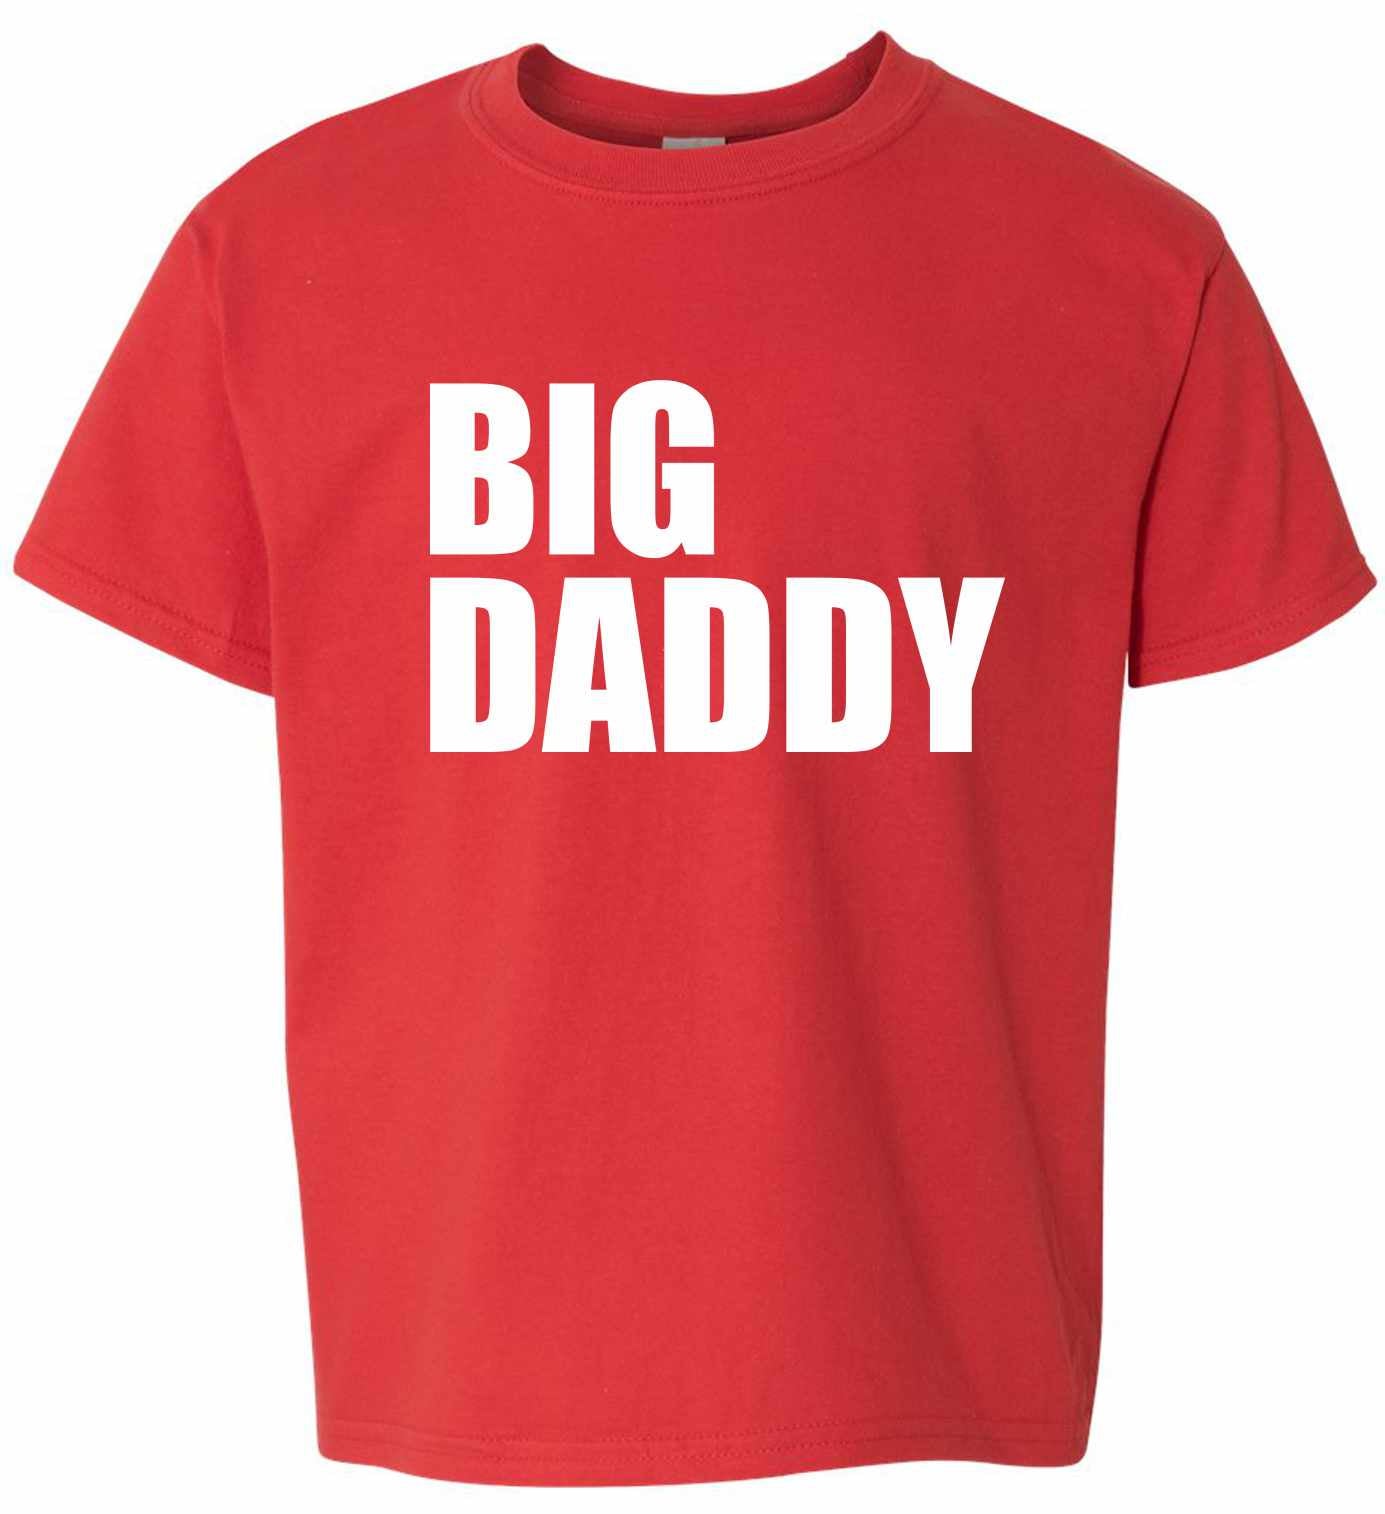 BIG DADDY on Kids T-Shirt